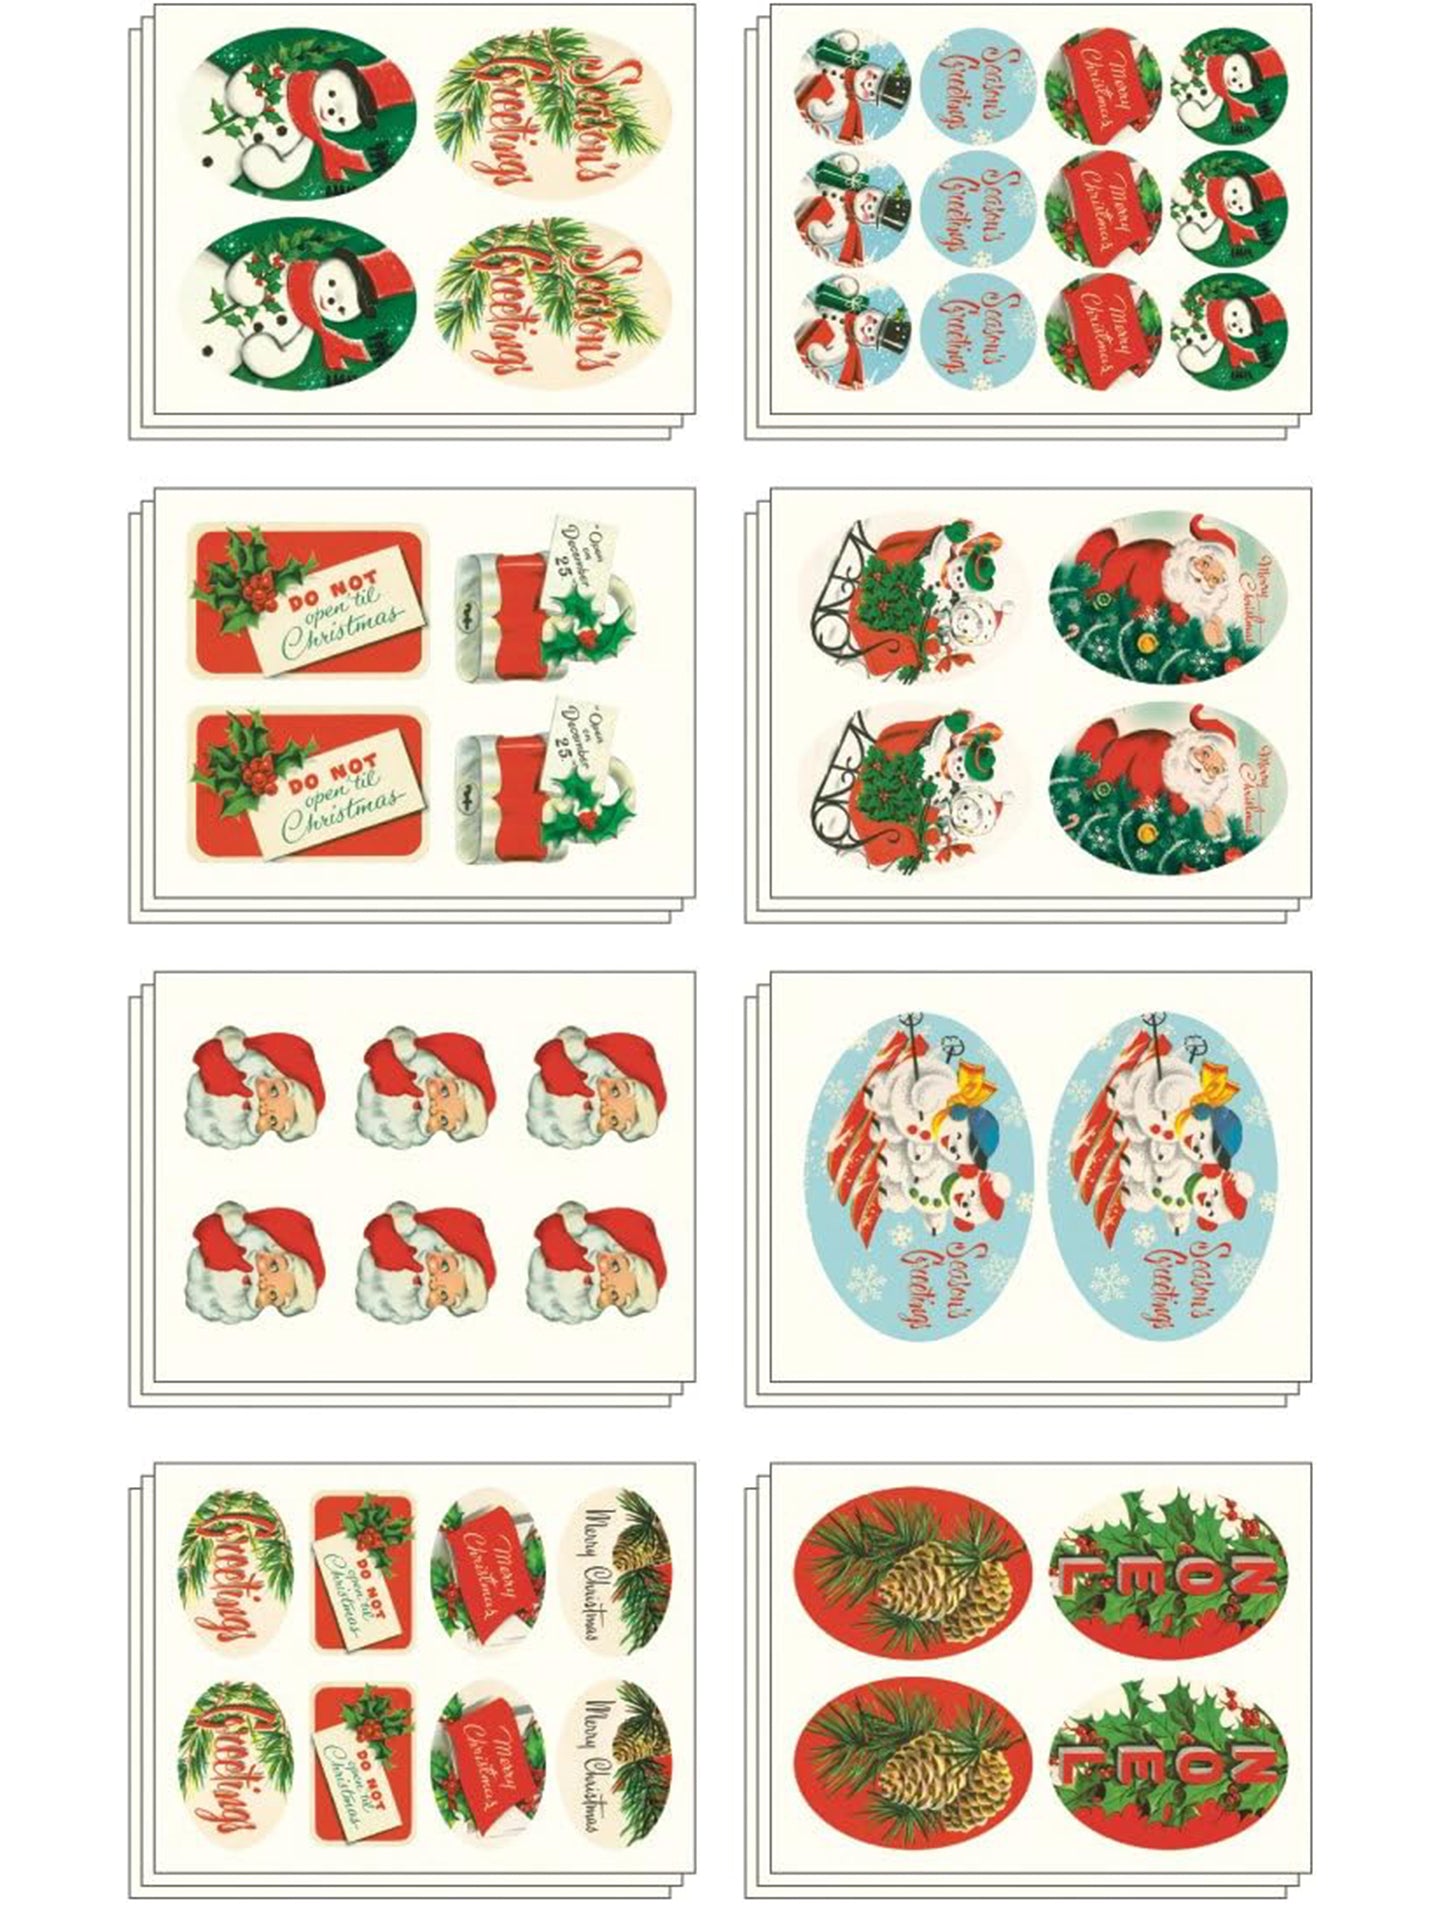 Tin Box of Christmas Stickers